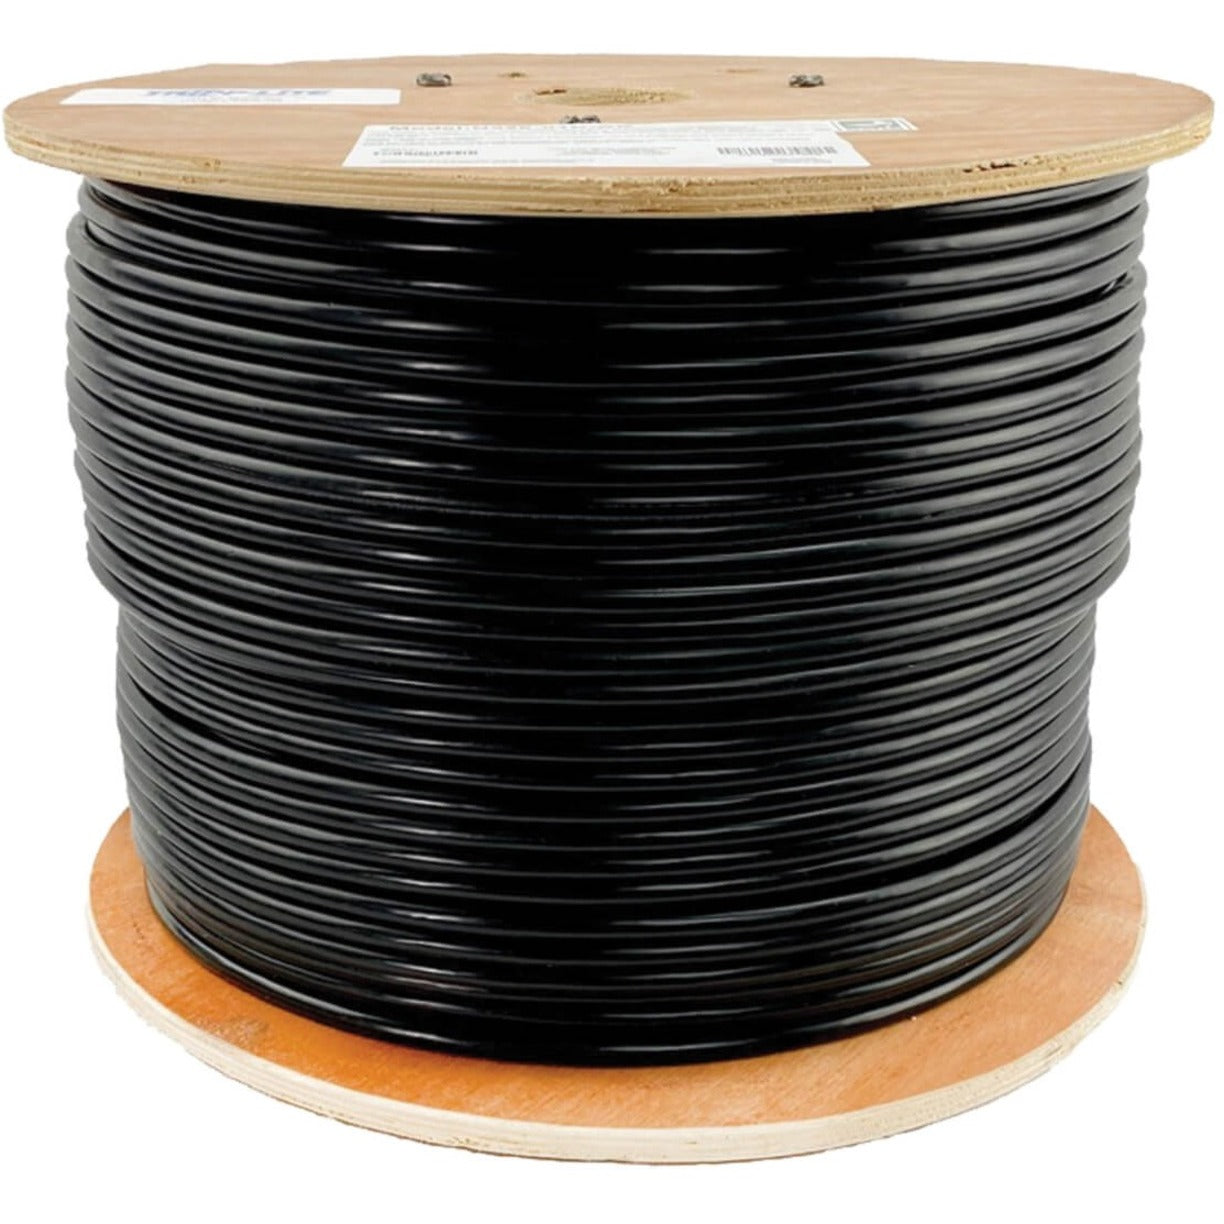 Tripp Lite N228-01K-BK Cat6/6e Ethernet Cable, Black, 1000 ft, Flexible, 1 Gbit/s Data Transfer Rate